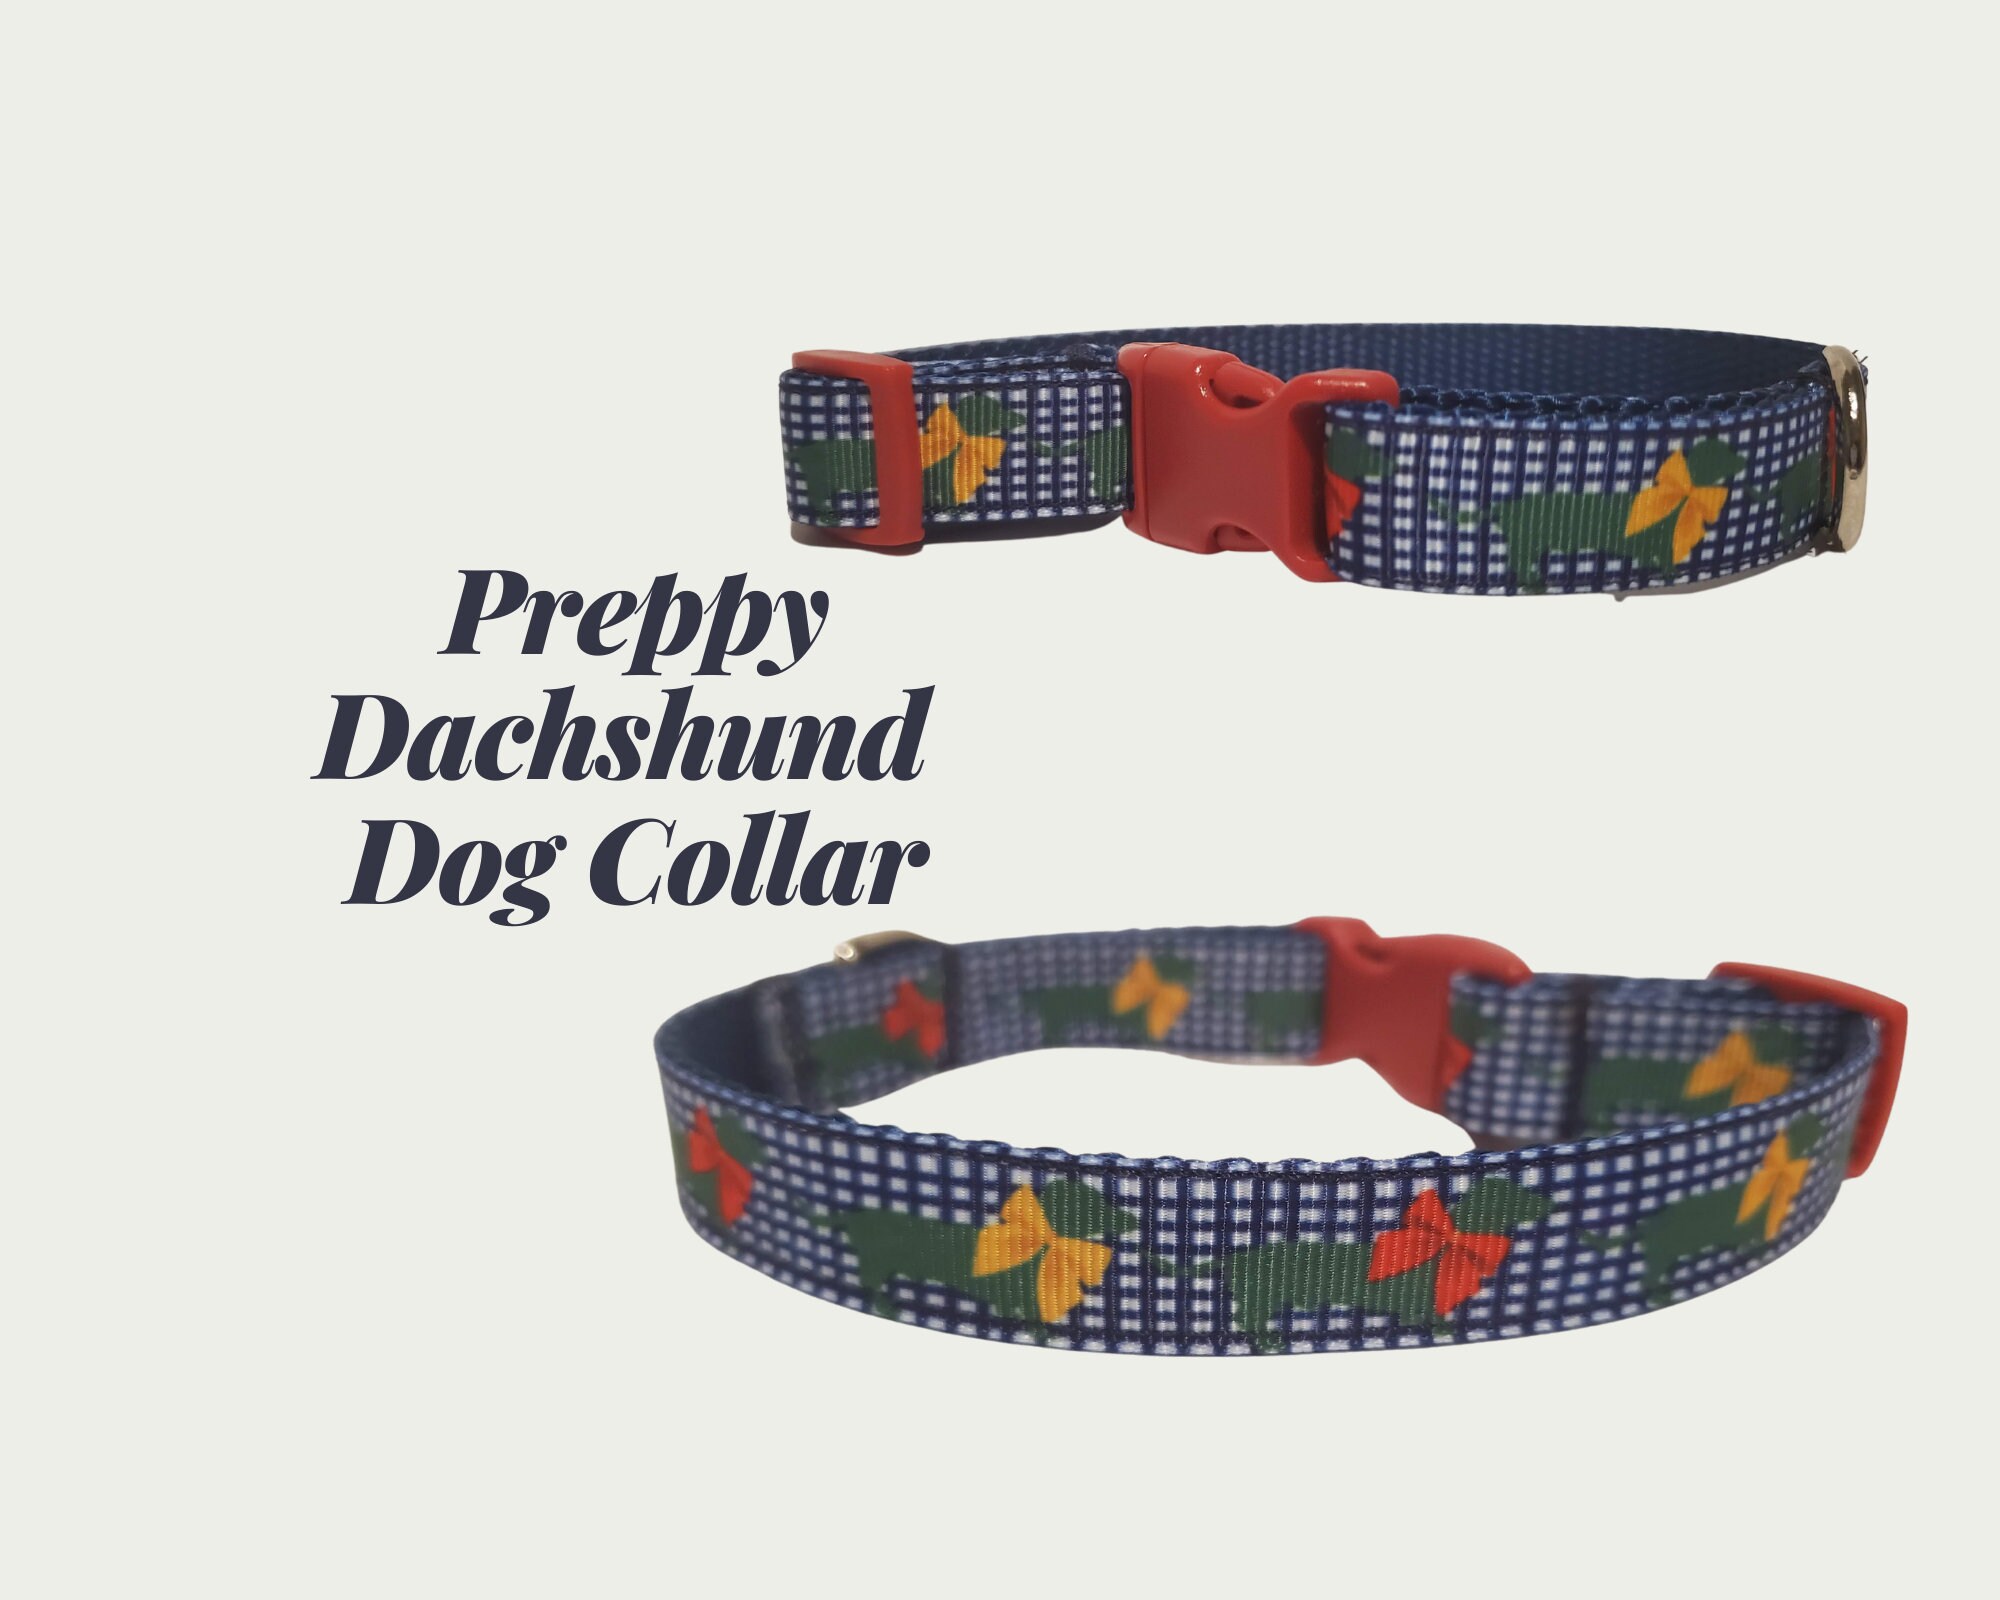 Preppy Needlepoint Dog Collars